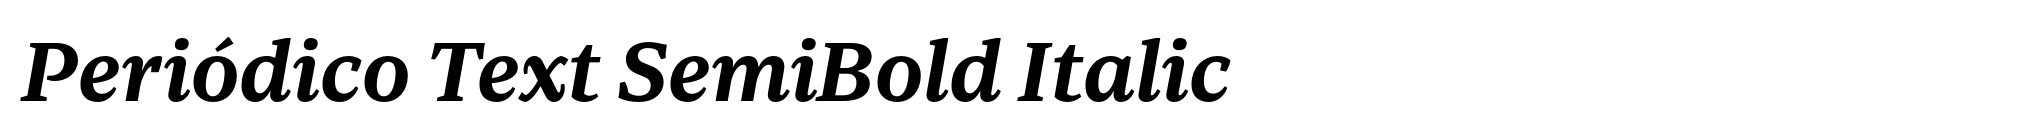 Periódico Text SemiBold Italic image